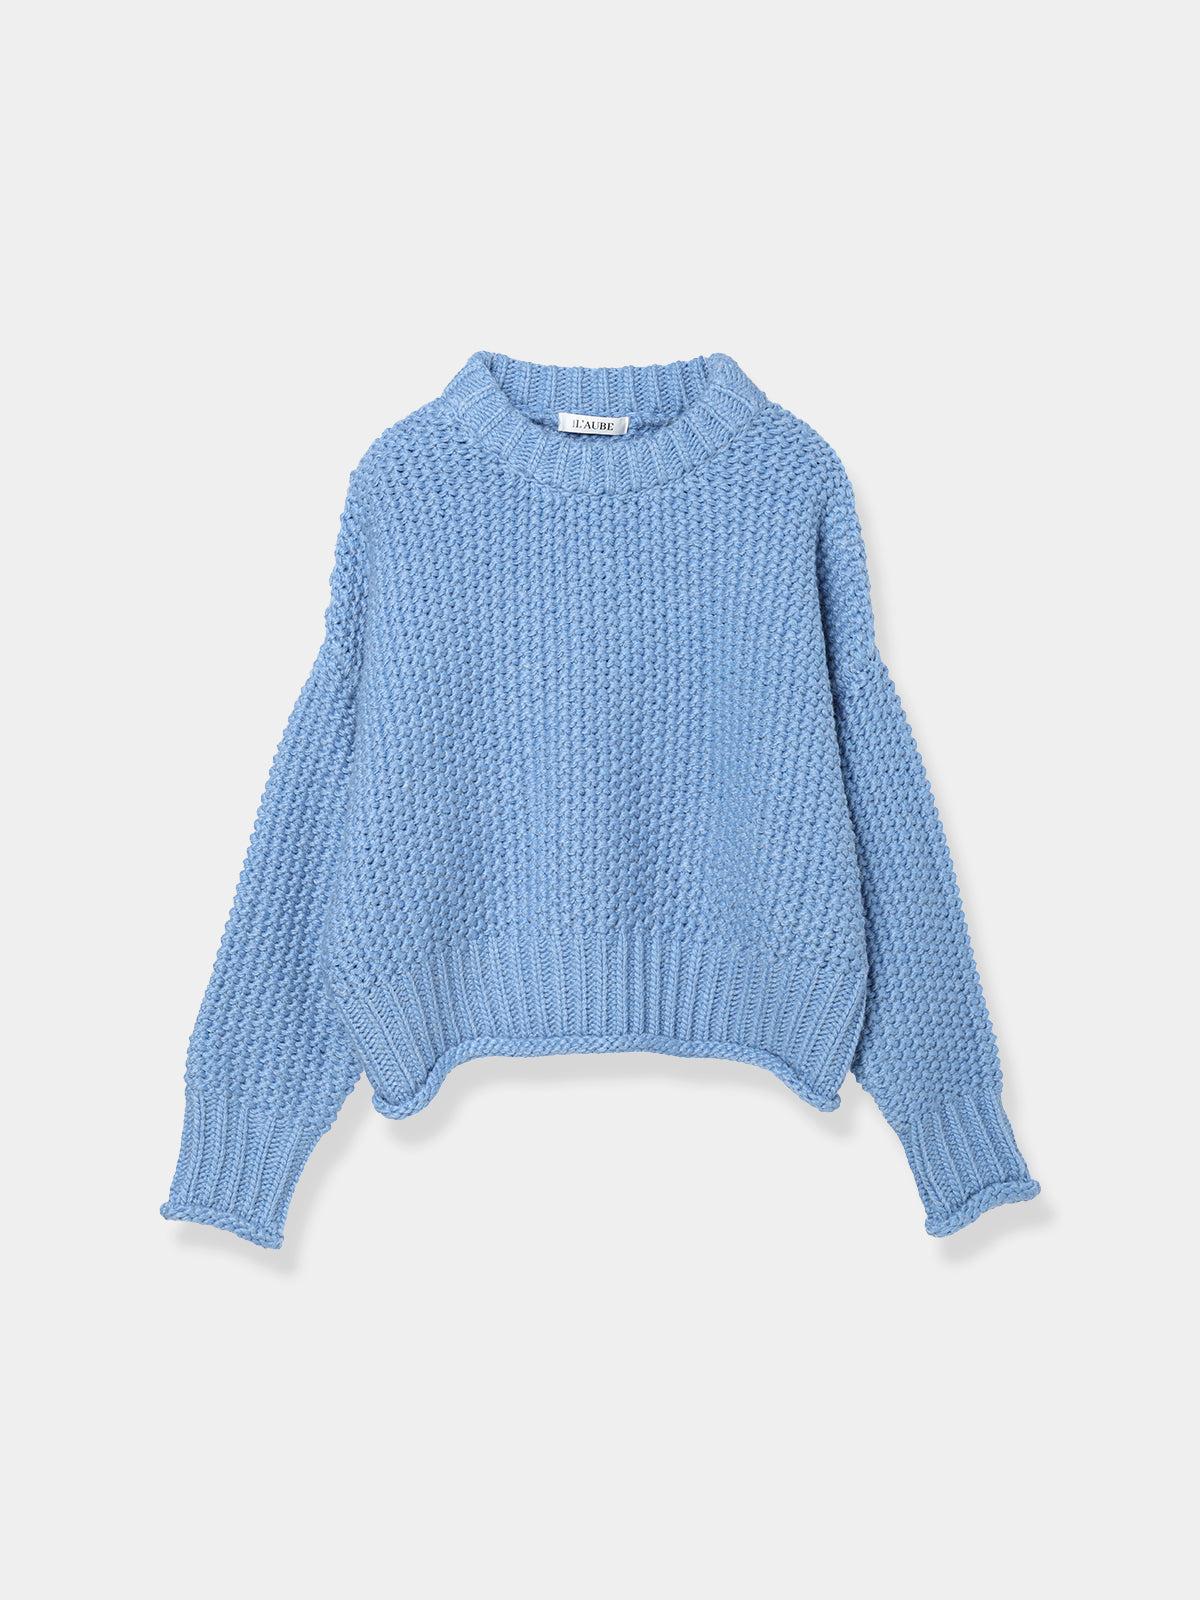 Cropped Knit Tops - ニット/セーター